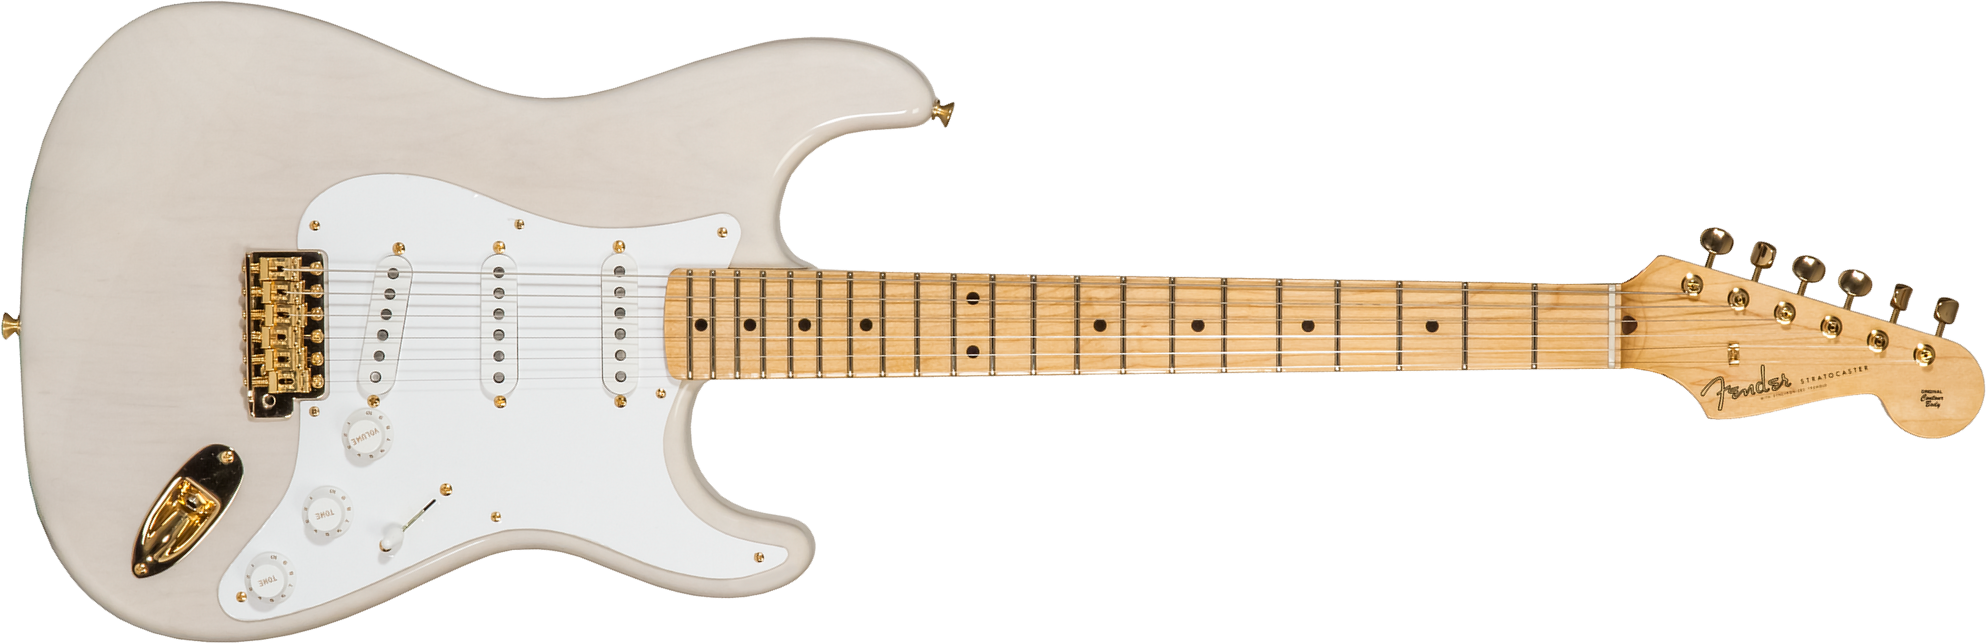 Fender Custom Shop Strat 1957 3s Trem Mn #r125475 - Nos White Blonde - E-Gitarre in Str-Form - Main picture